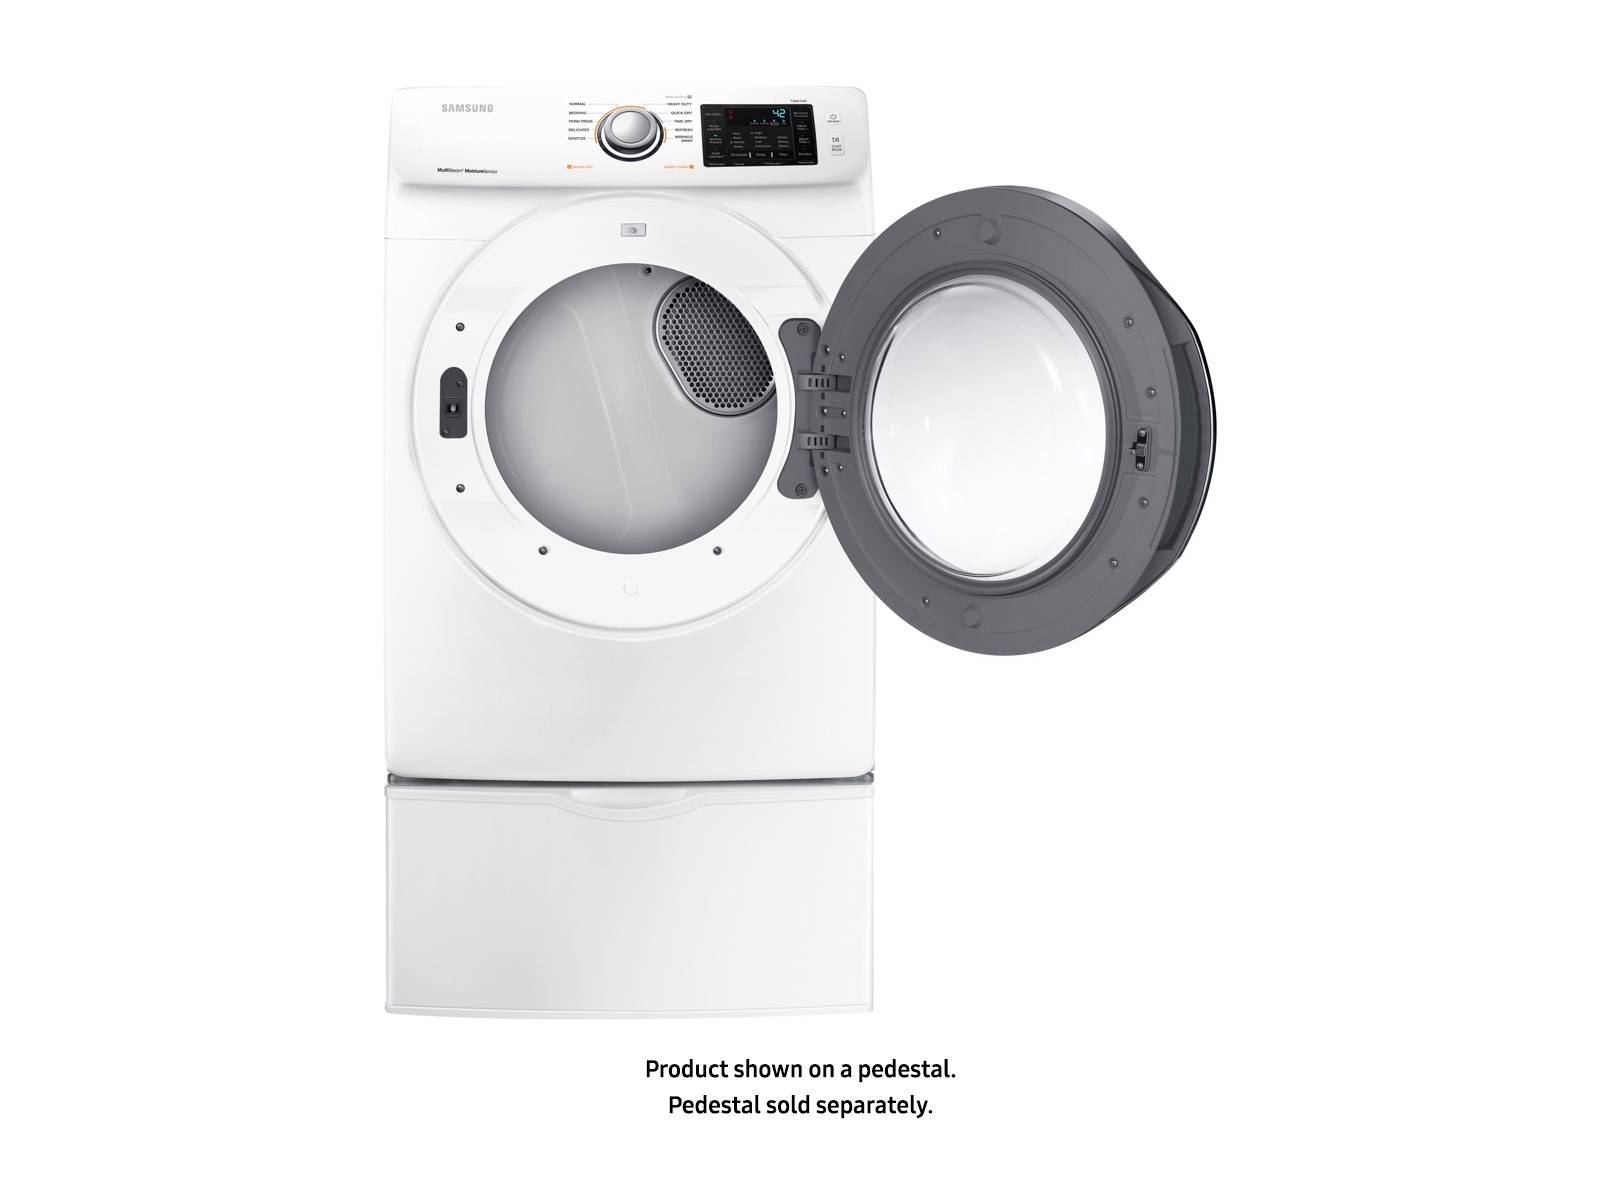 Samsung 7.5 cu ft. Natural Gas Dryer (Merlot) — Adaptive